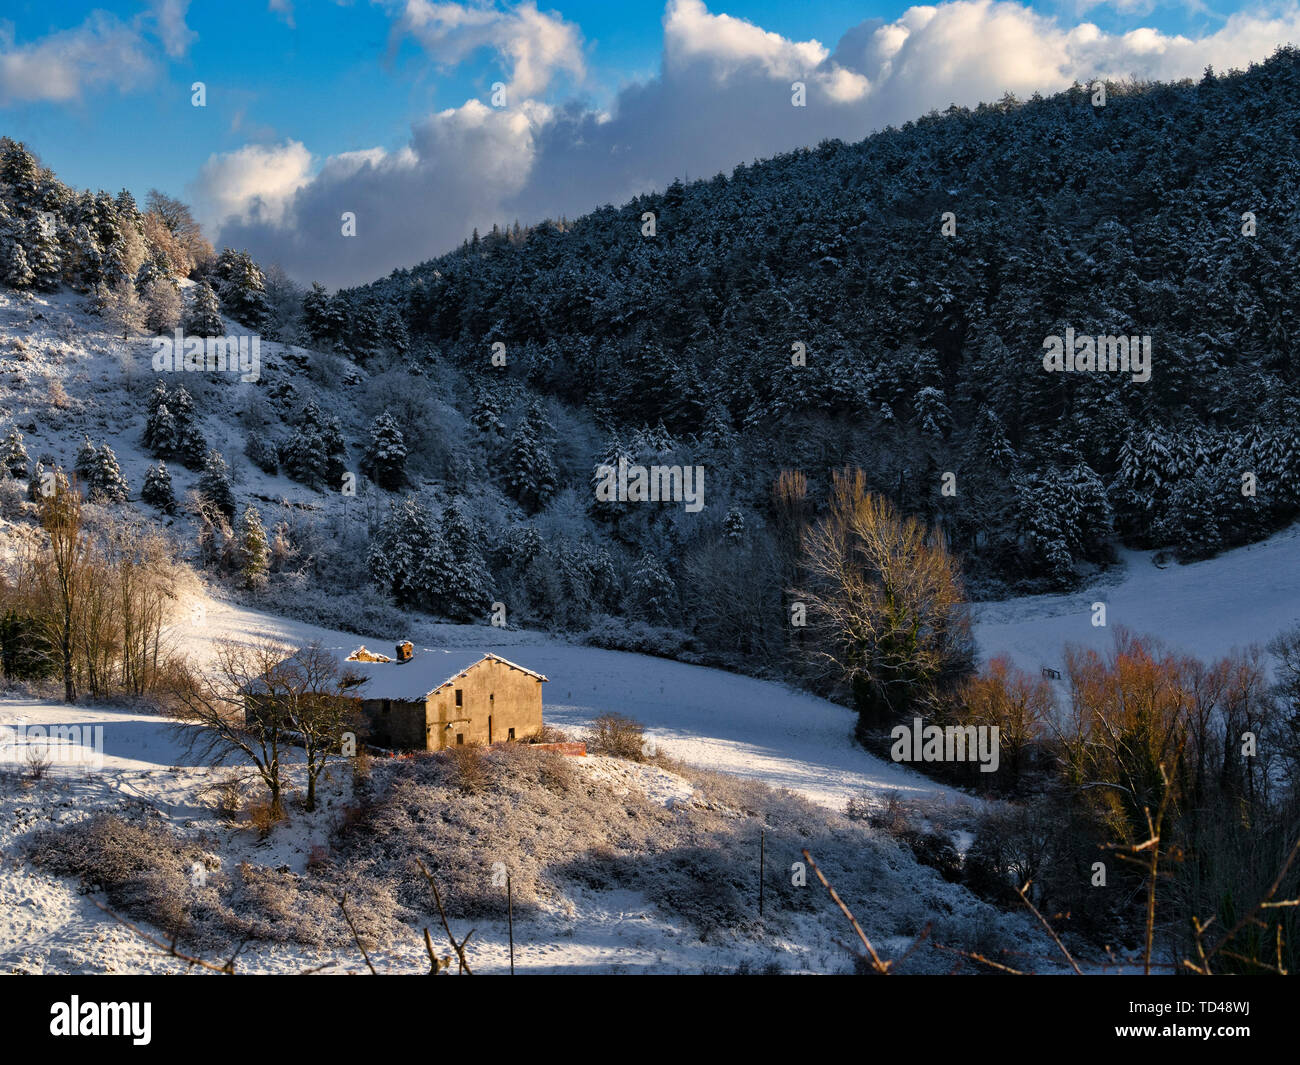 Snow on the Apennines in winter, Gubbio, Umbria, Italy, Europe Stock Photo